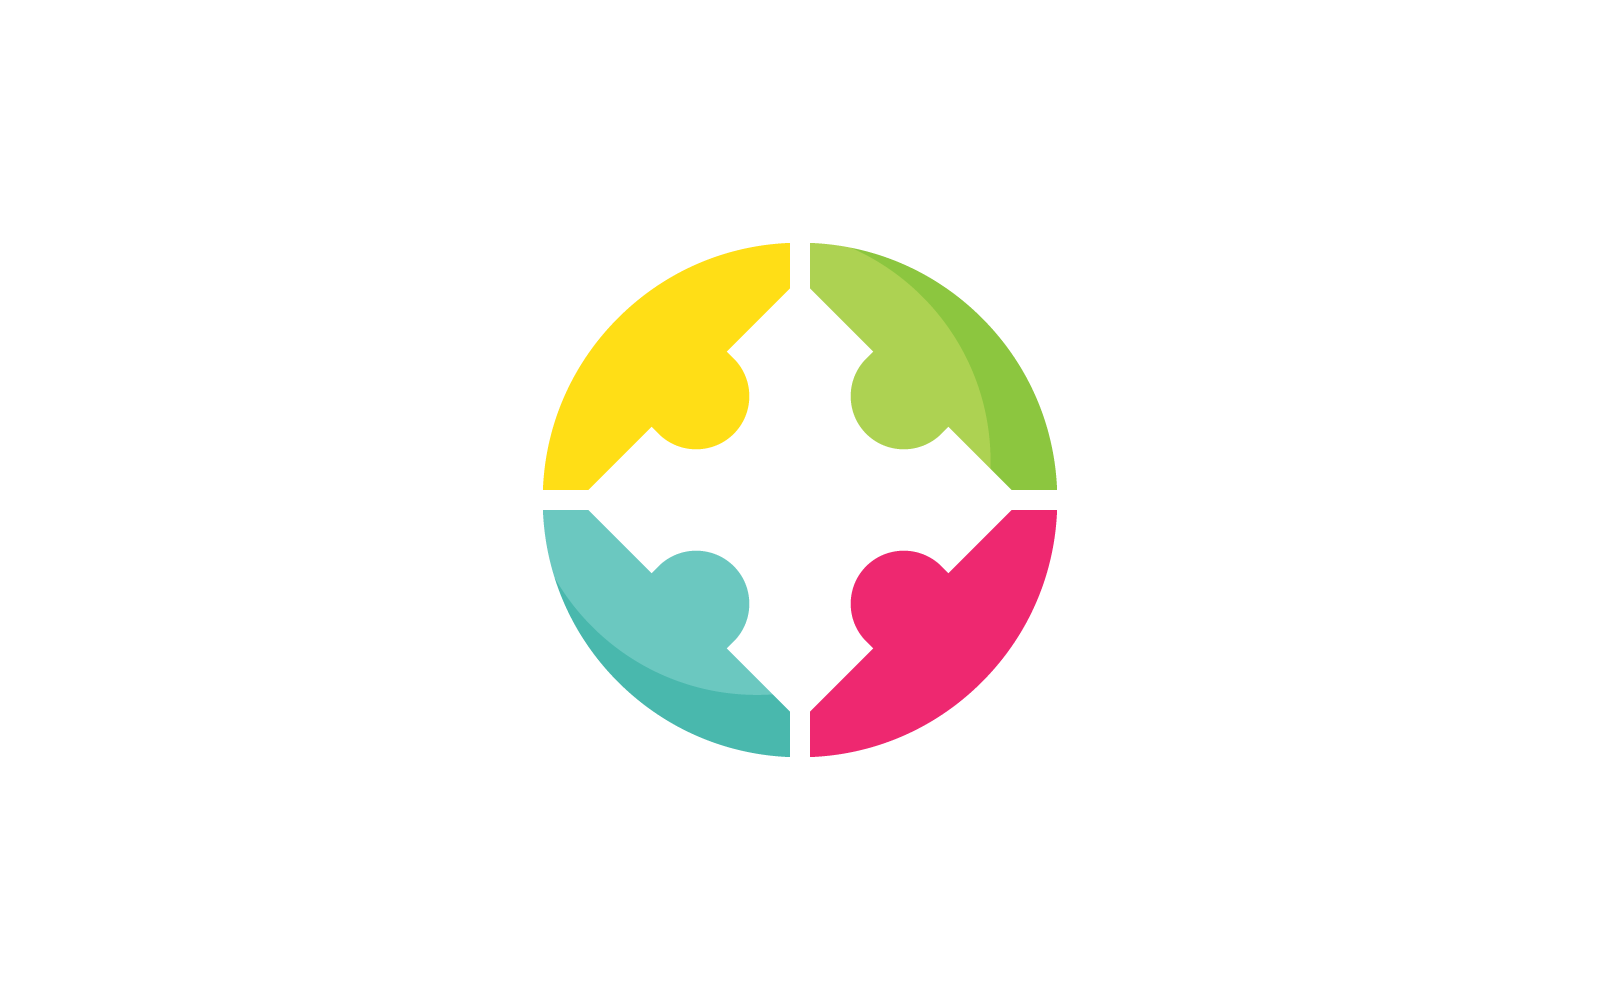 Community, network and social logo illustration vector design